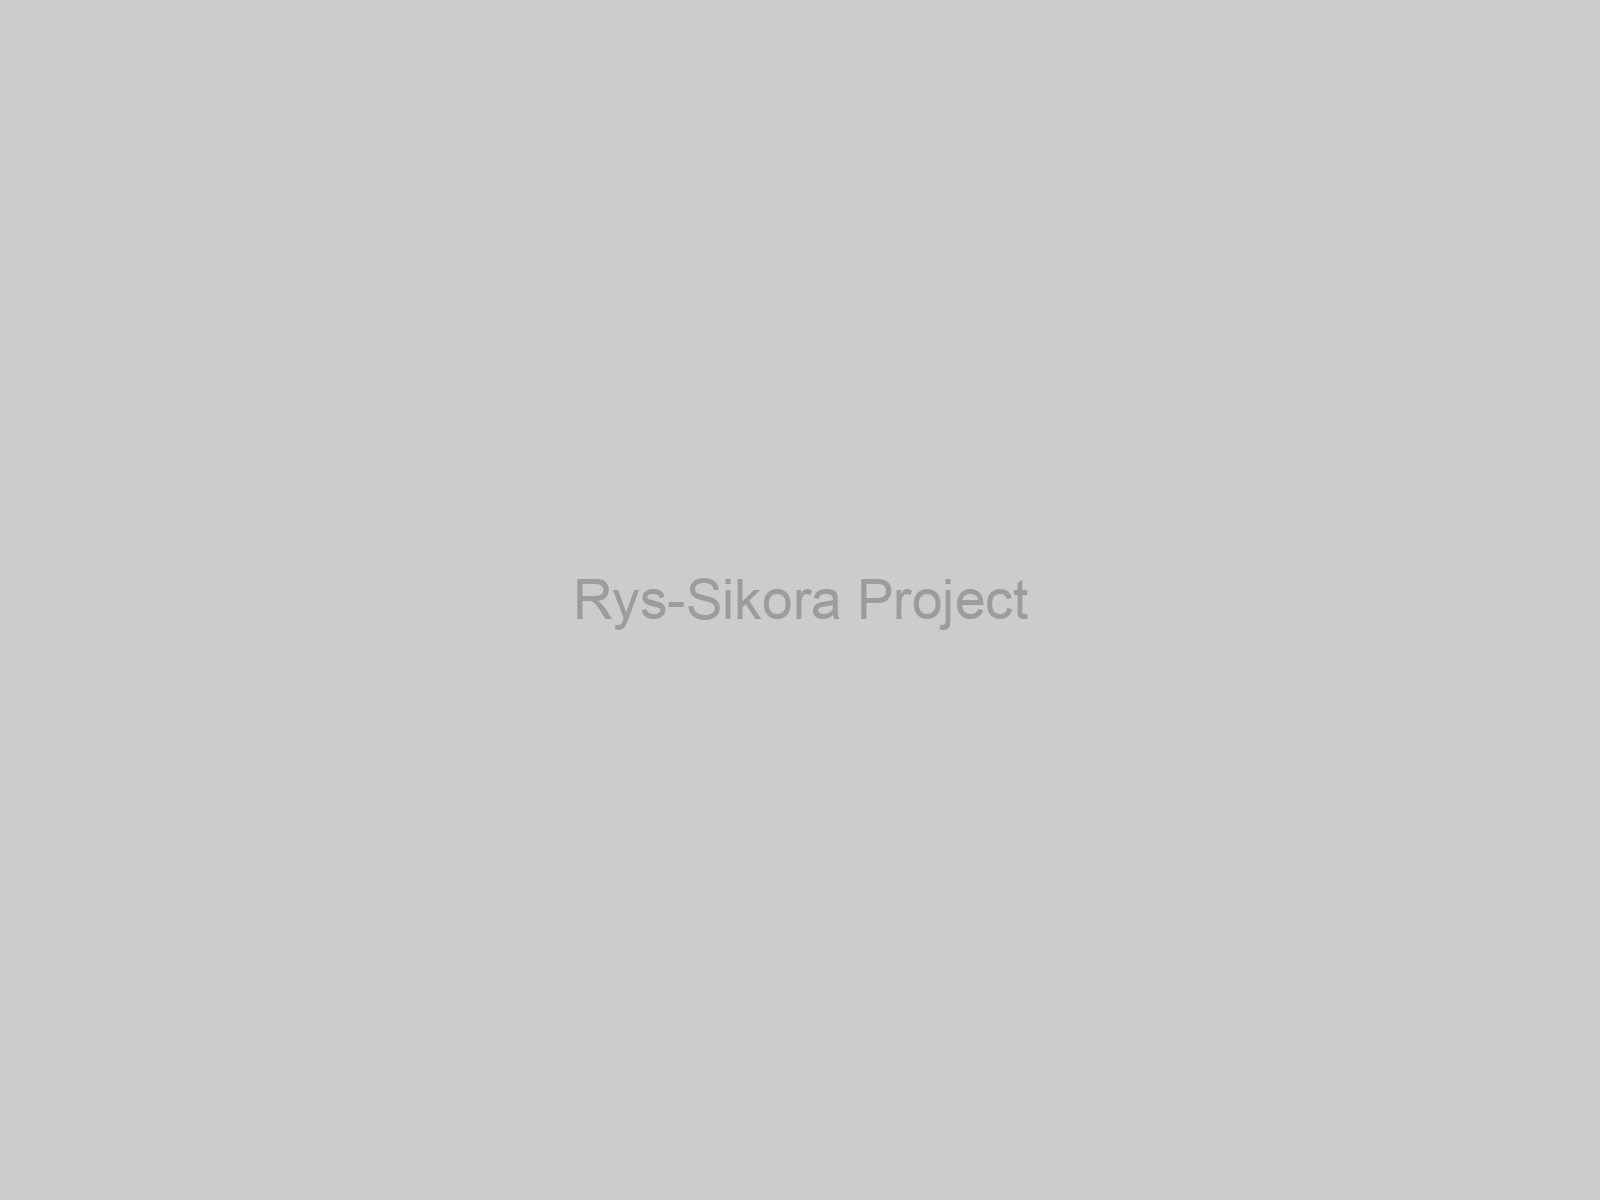 Rys-Sikora Project